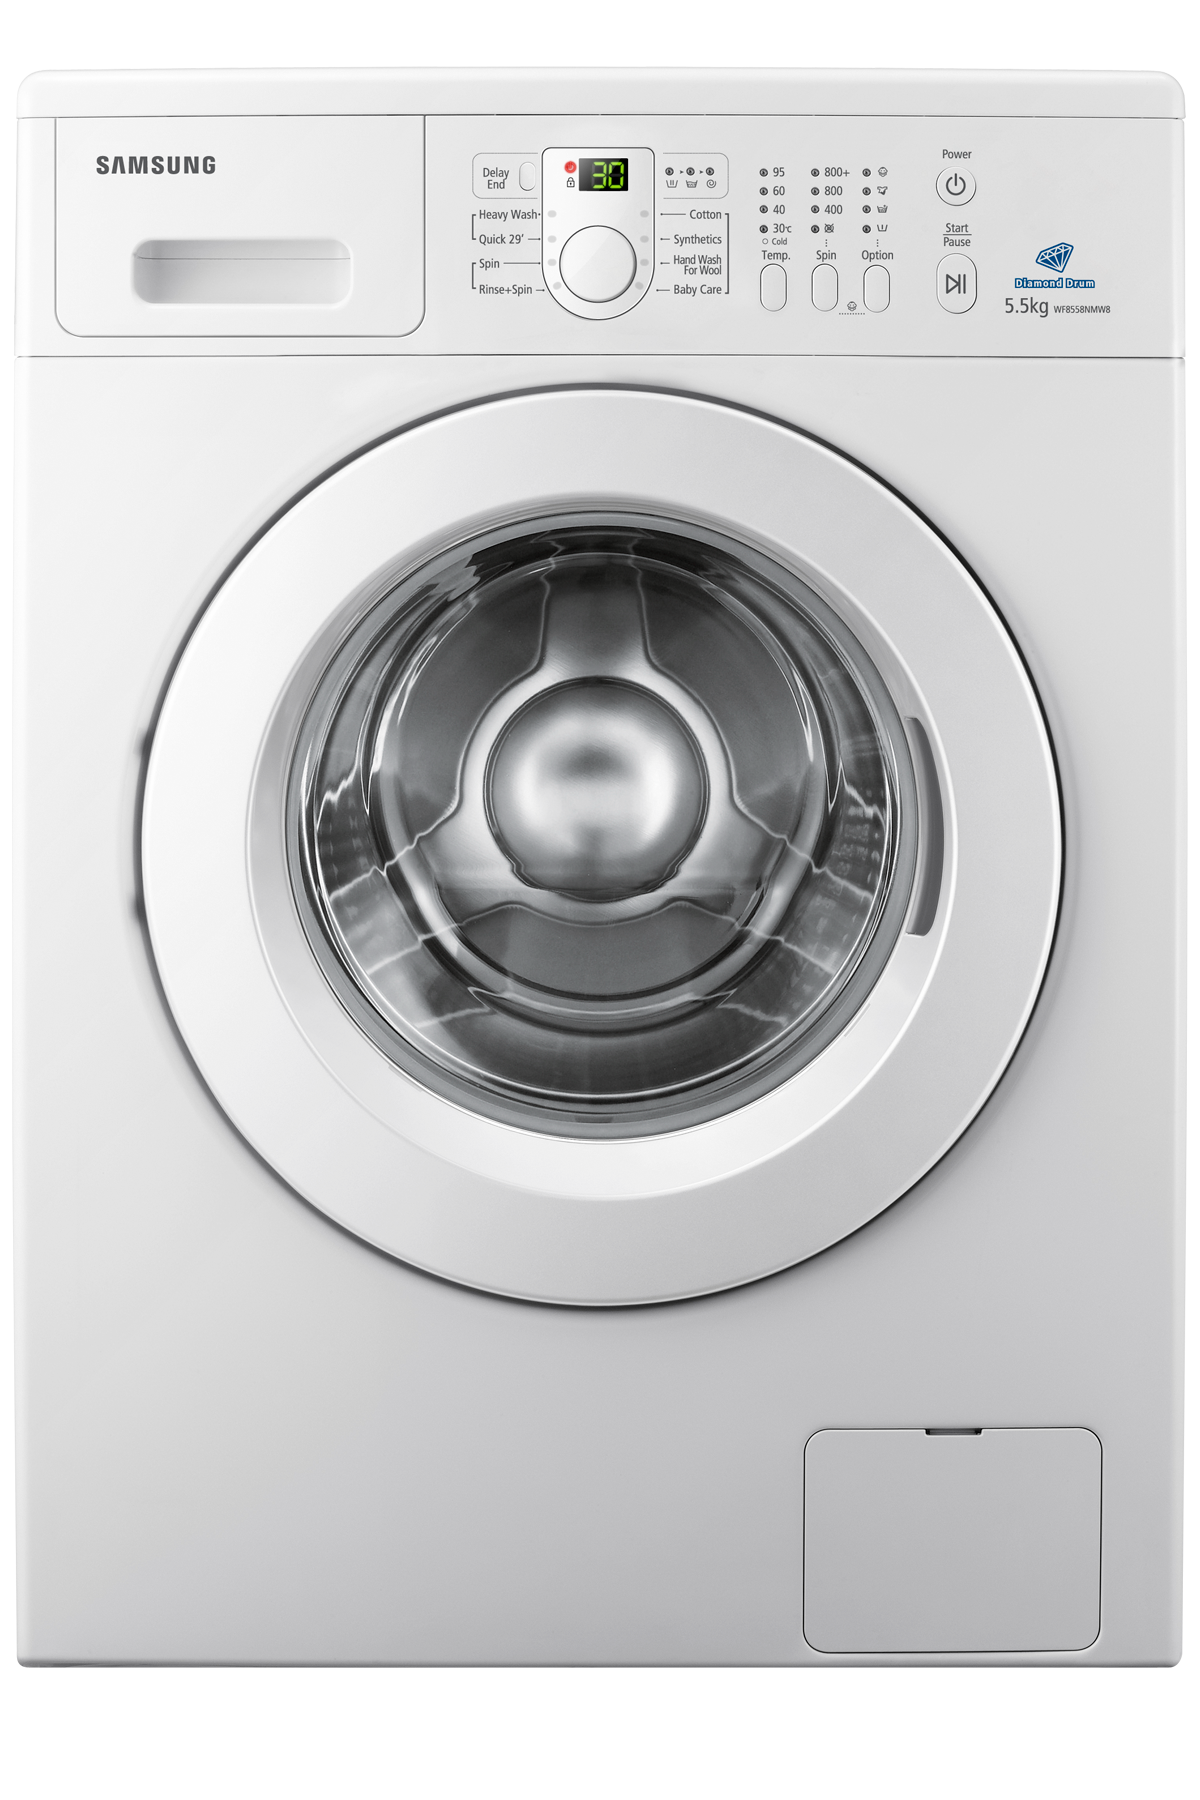 Samsung 5.5 kg Front Loading Washing Machine, Price, Specs